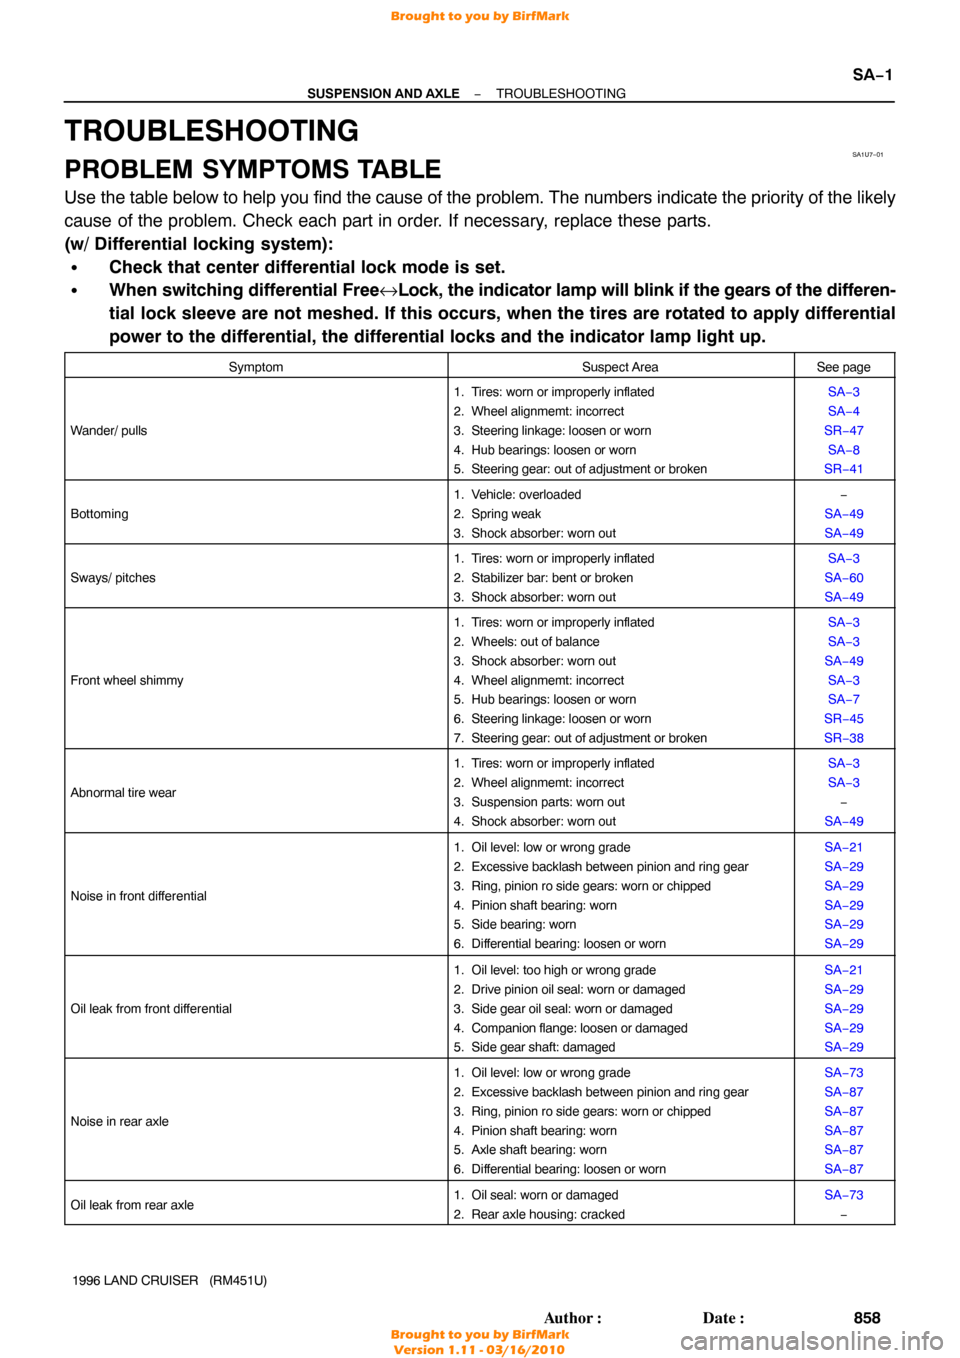 TOYOTA LAND CRUISER 1996 J80 Workshop Manual SA1U7−01
−
SUSPENSION AND AXLE TROUBLESHOOTING
SA−1
858
Author: Date:
1996 LAND CRUISER   (RM451U)
TROUBLESHOOTING
PROBLEM SYMPTOMS TABLE
Use the table below to help you find the cause of the 